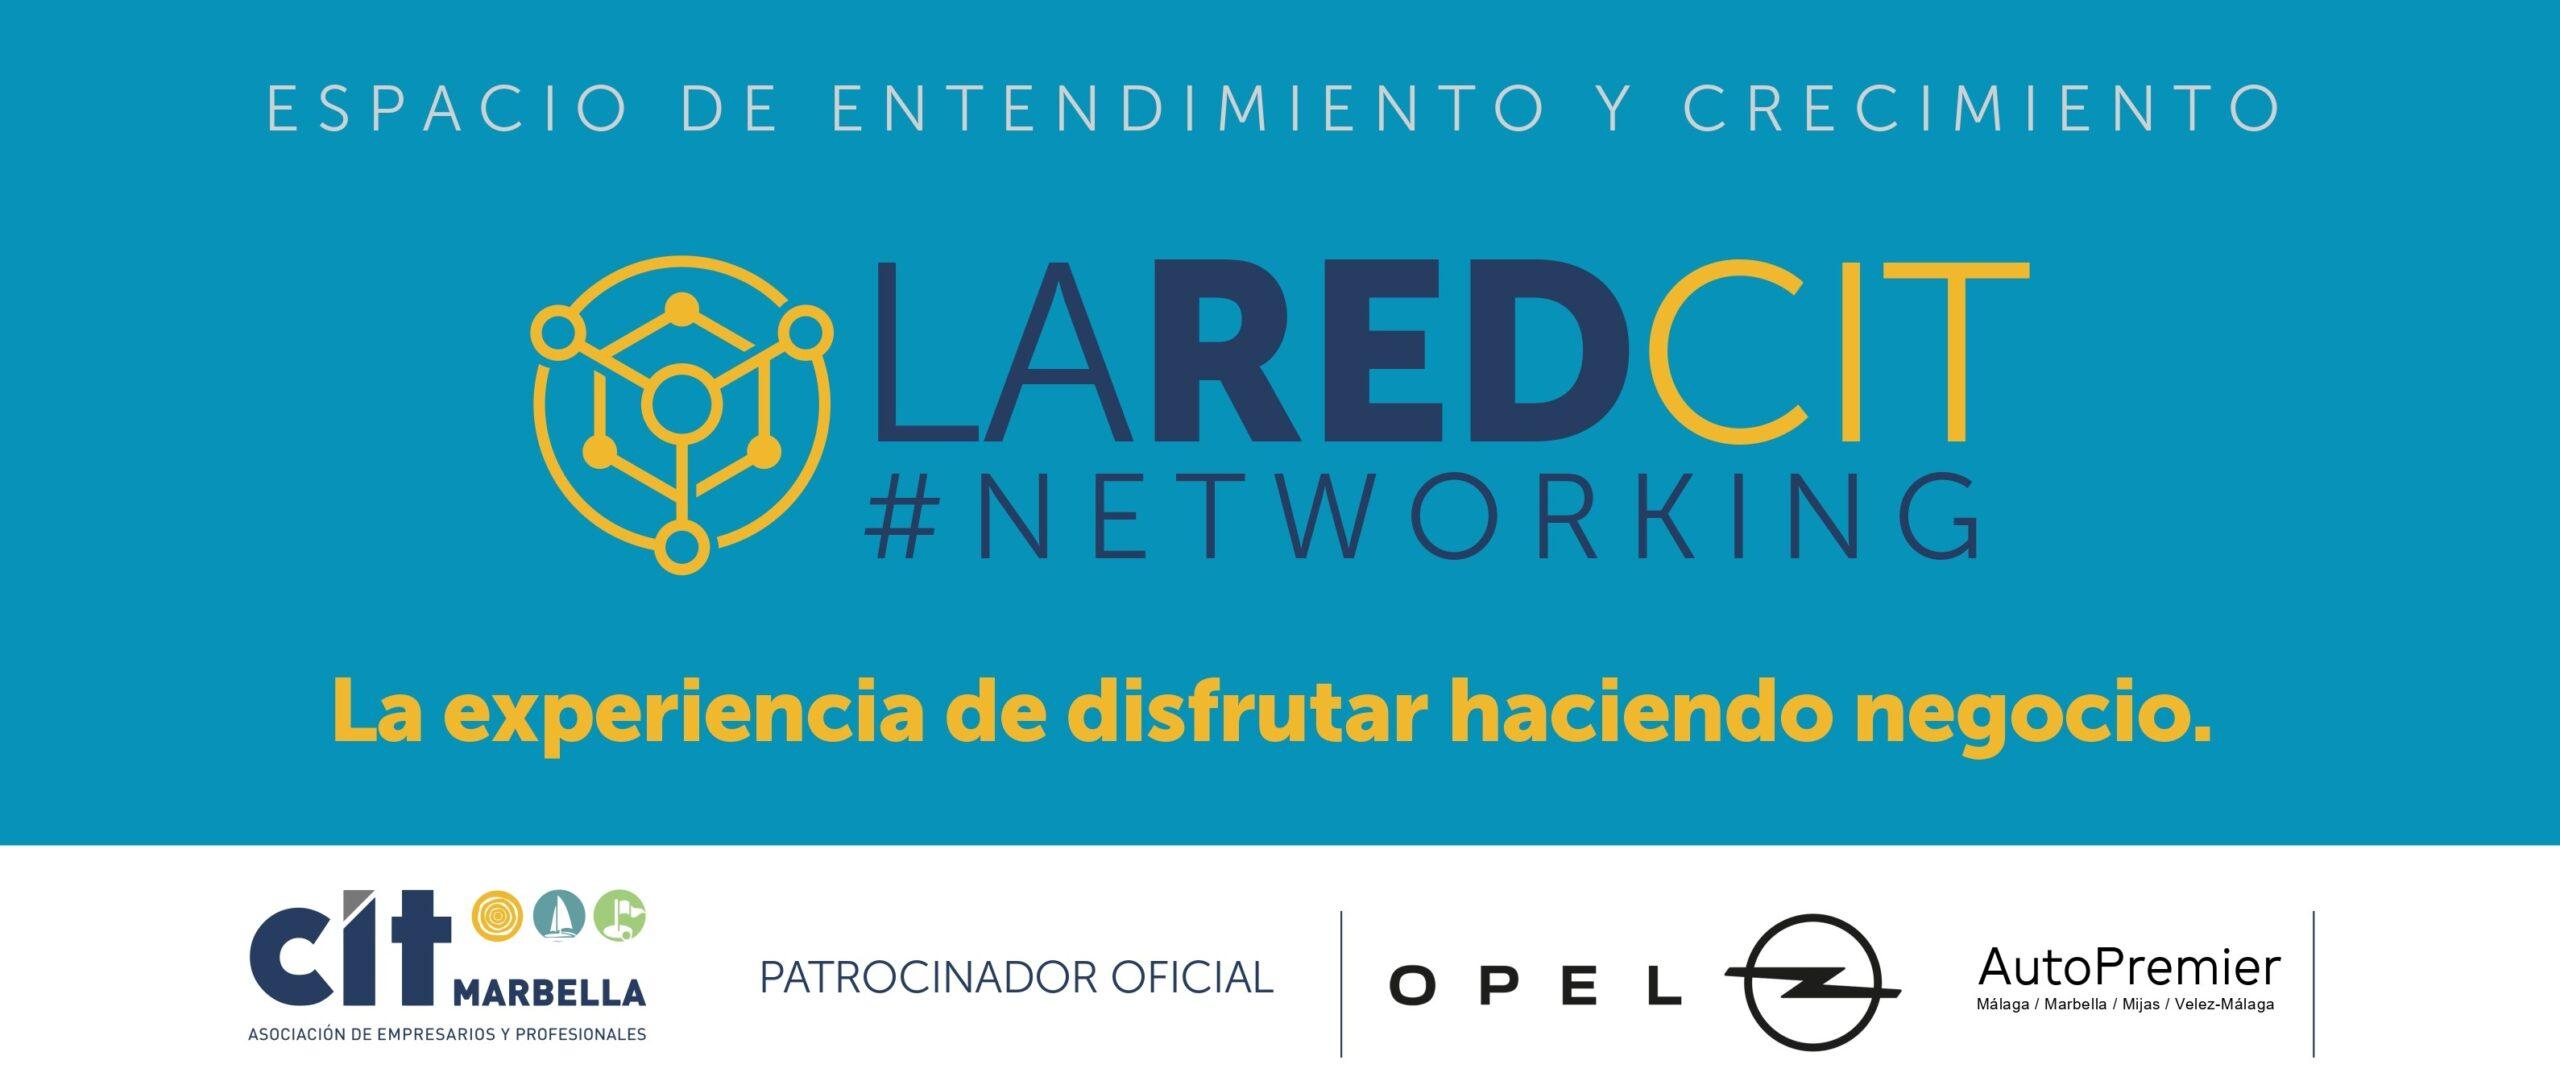 LA RED CIT #NETWORKING EN CINES KINÉPOLIS LA CAÑADA